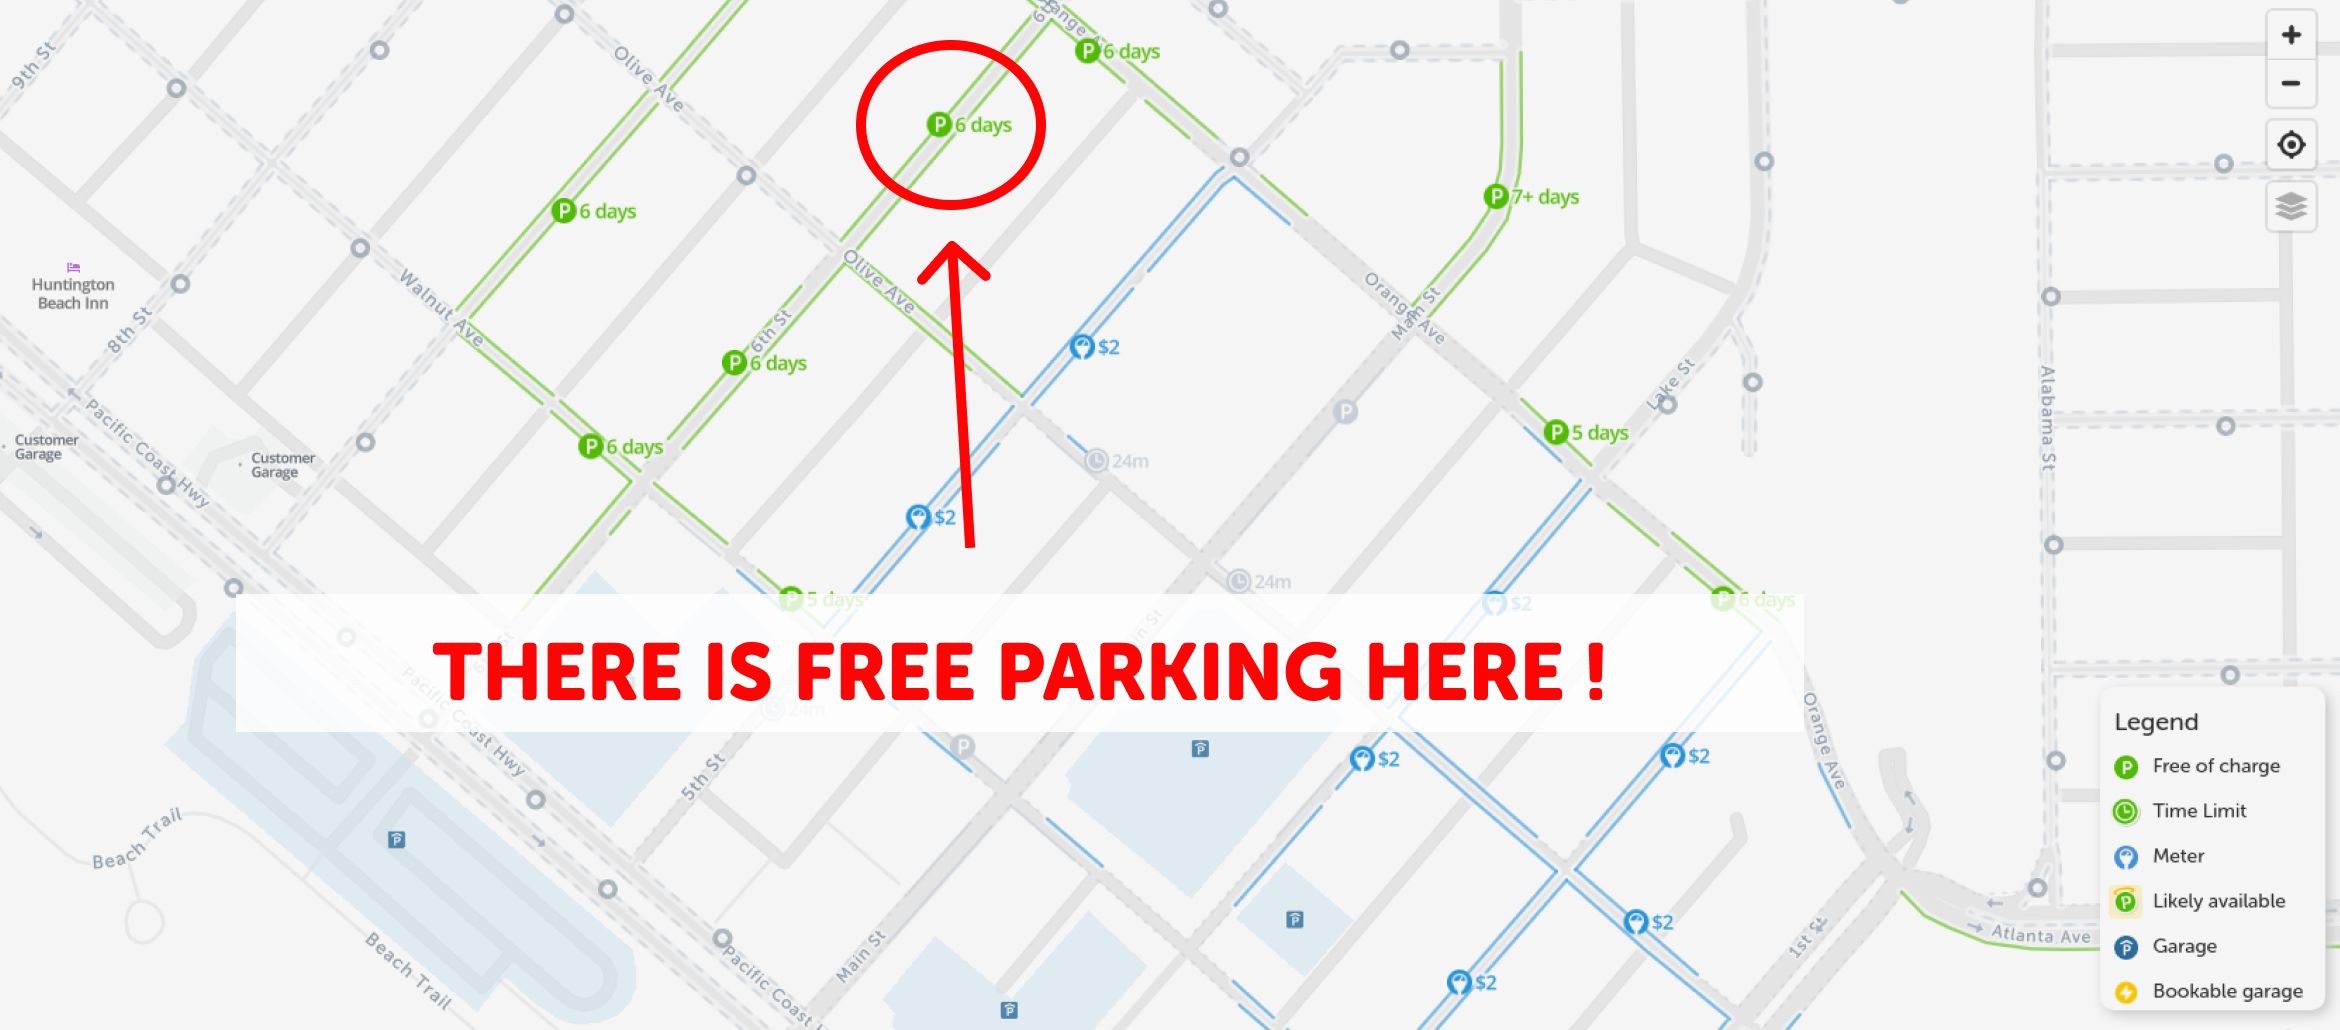 map of free parking in Huntington beach - SpotAngels